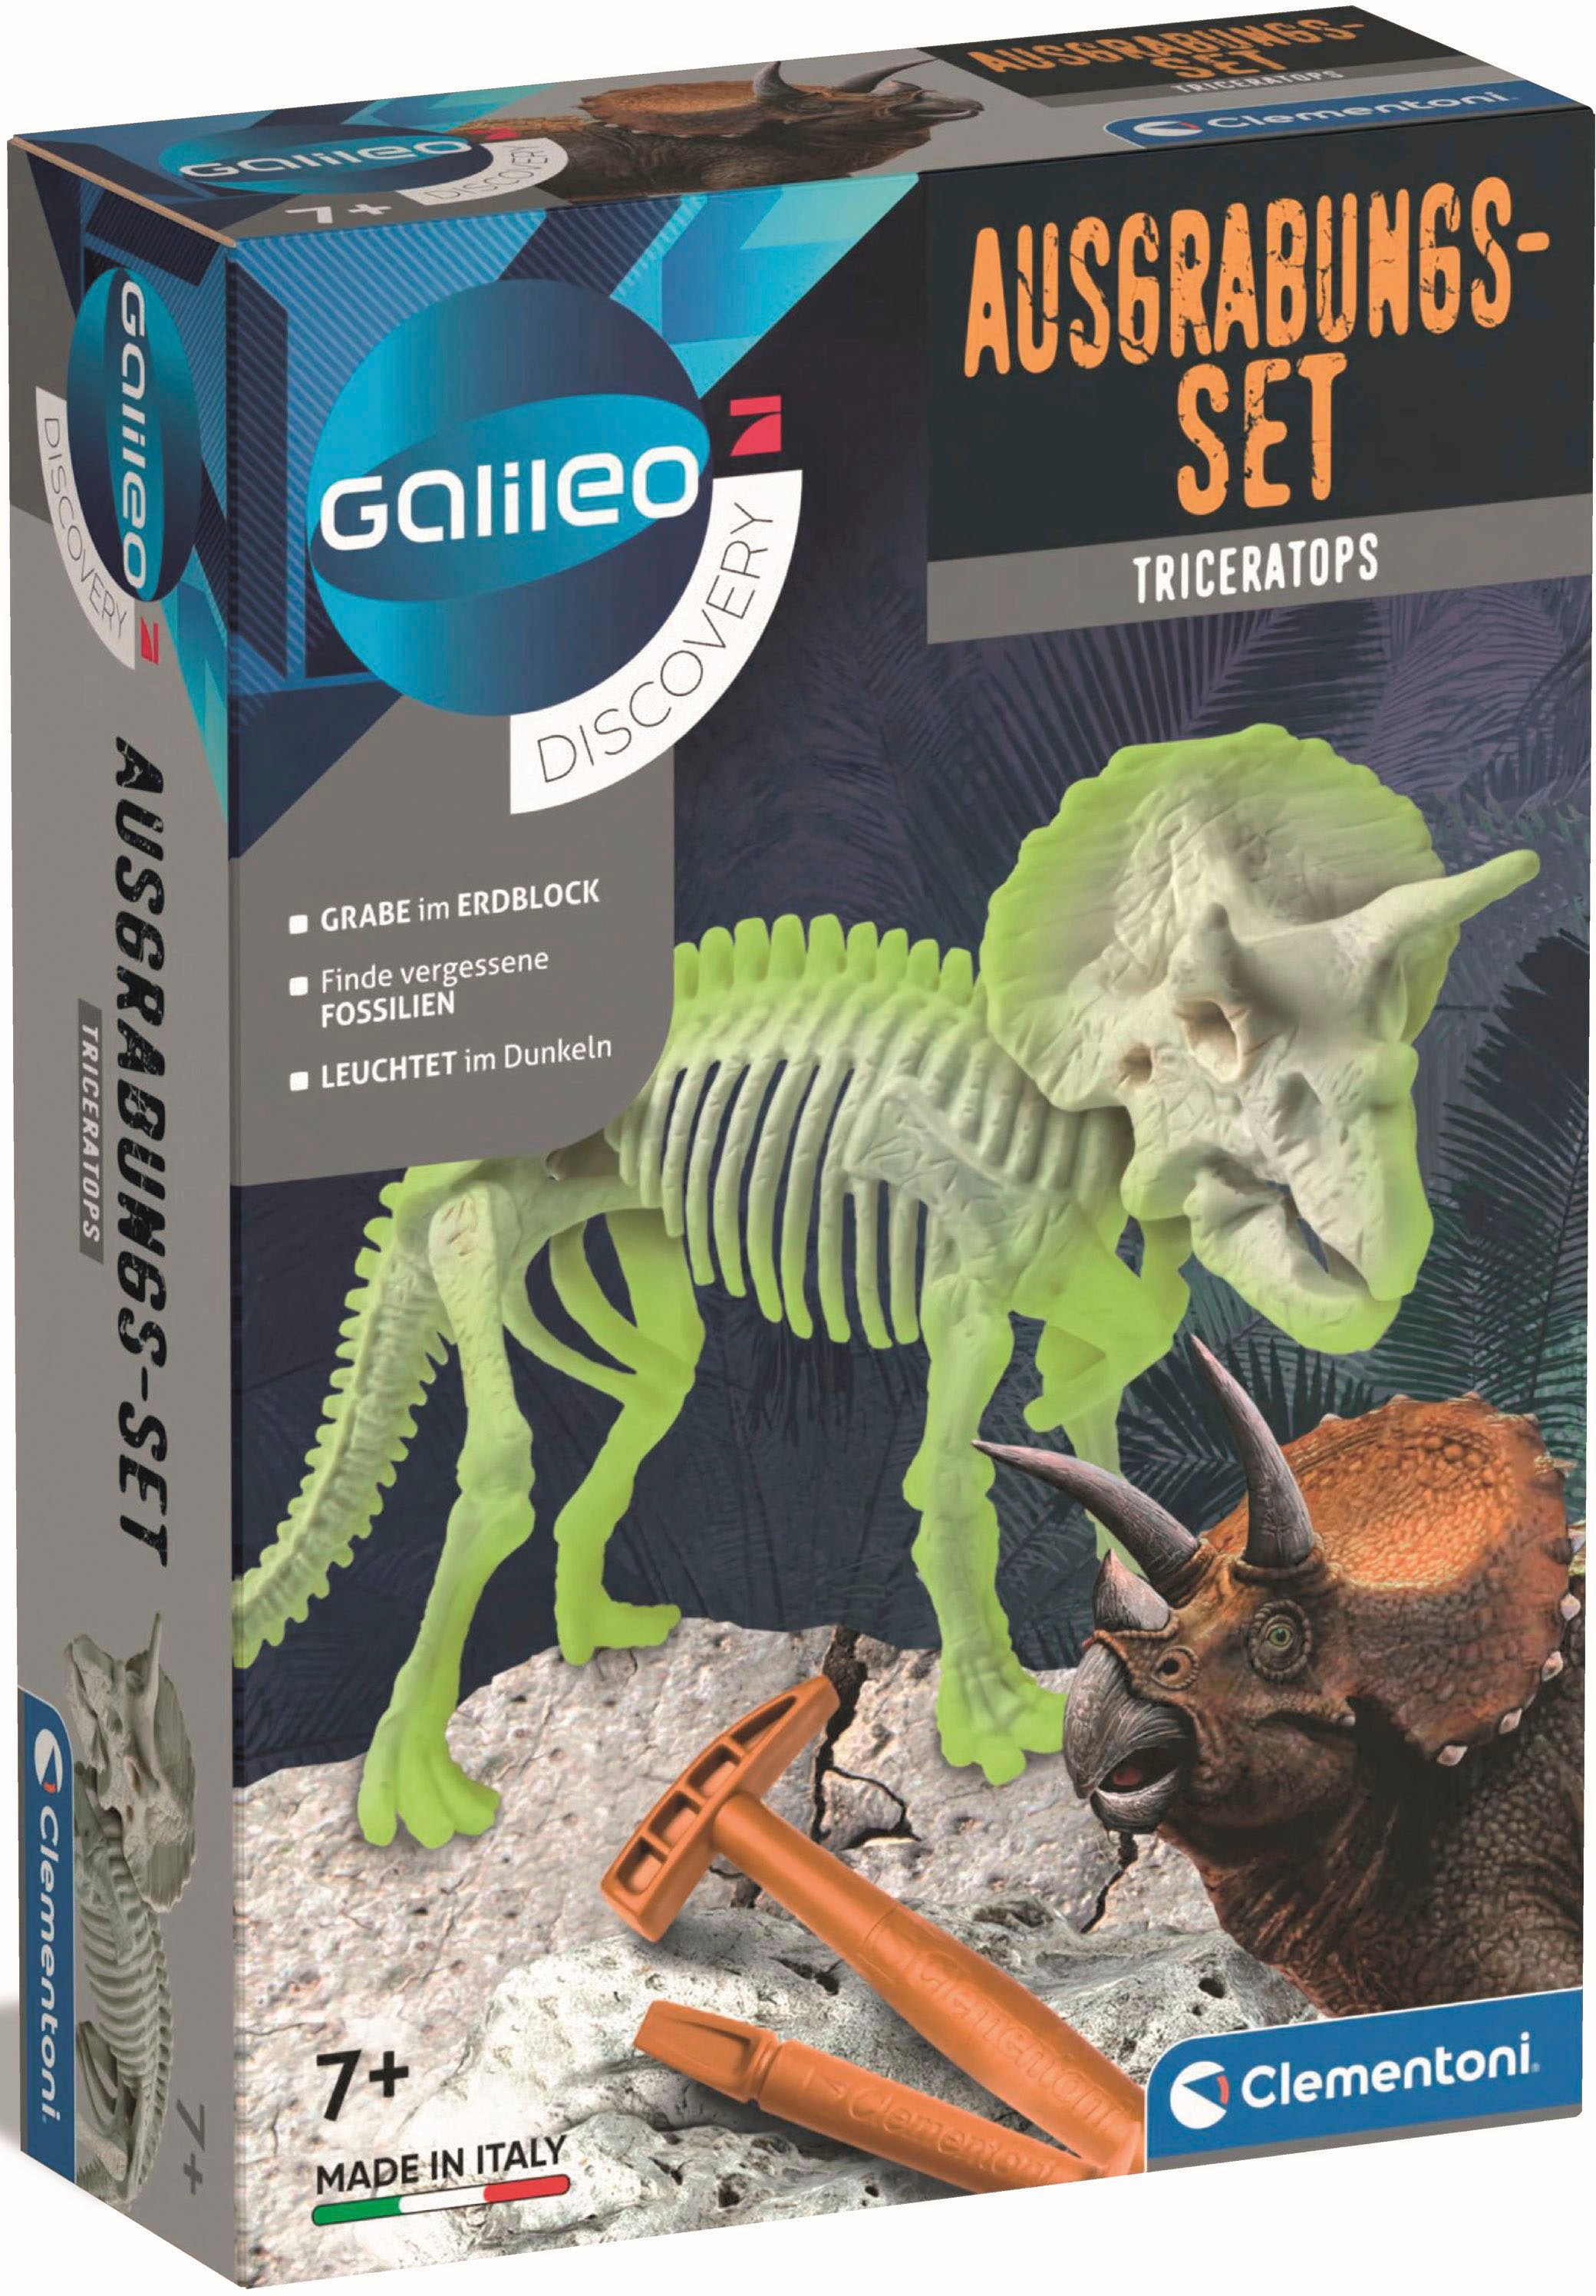 Clementoni® Experimentierkasten »Galileo, Ausgrabungs-Set Triceratops«, Made in Europe